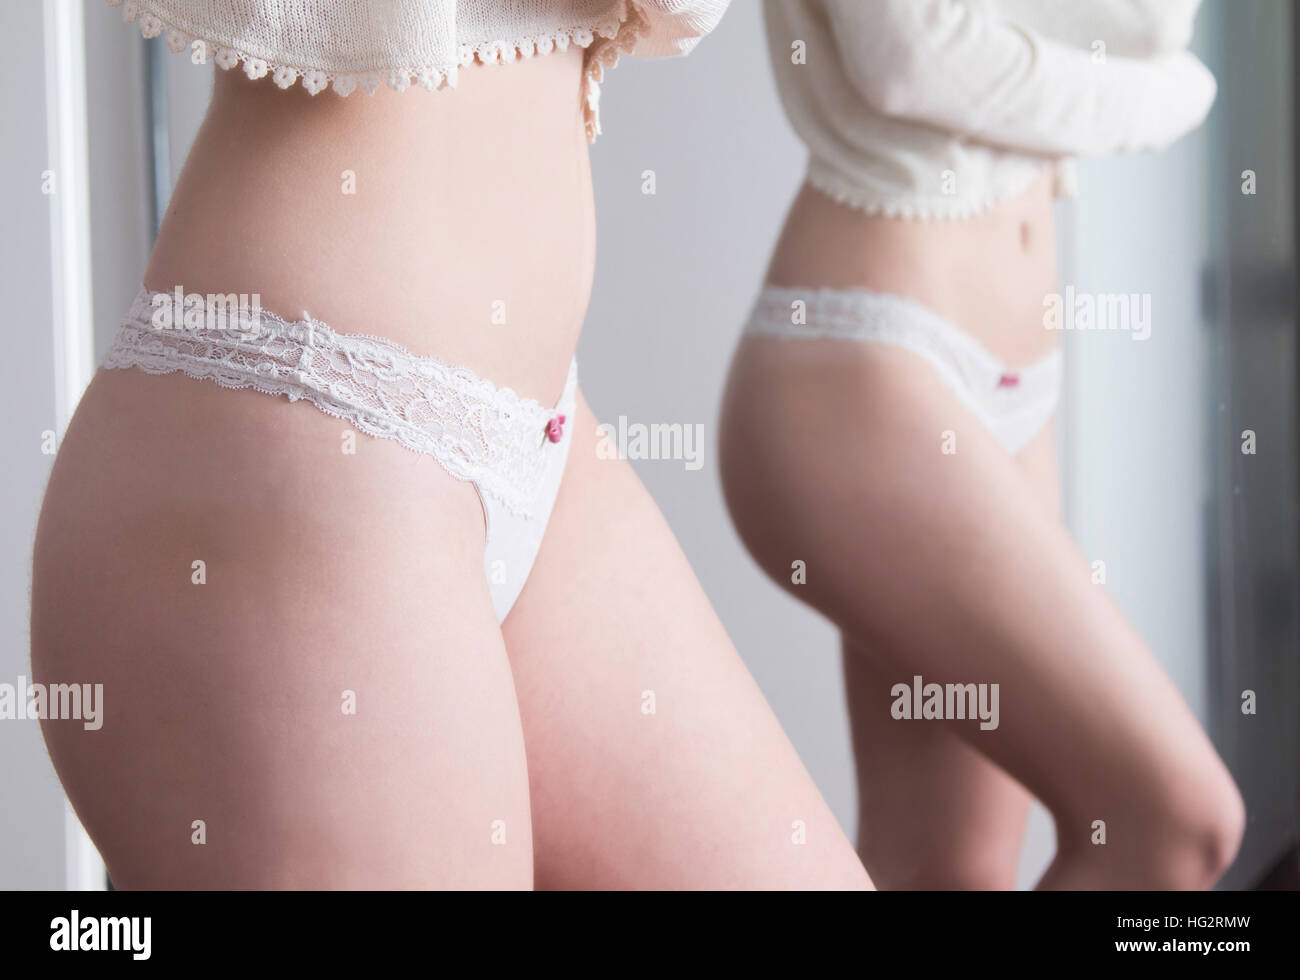 Sexy girl in white panties standing next to mirror, body detail Stock Photo  - Alamy